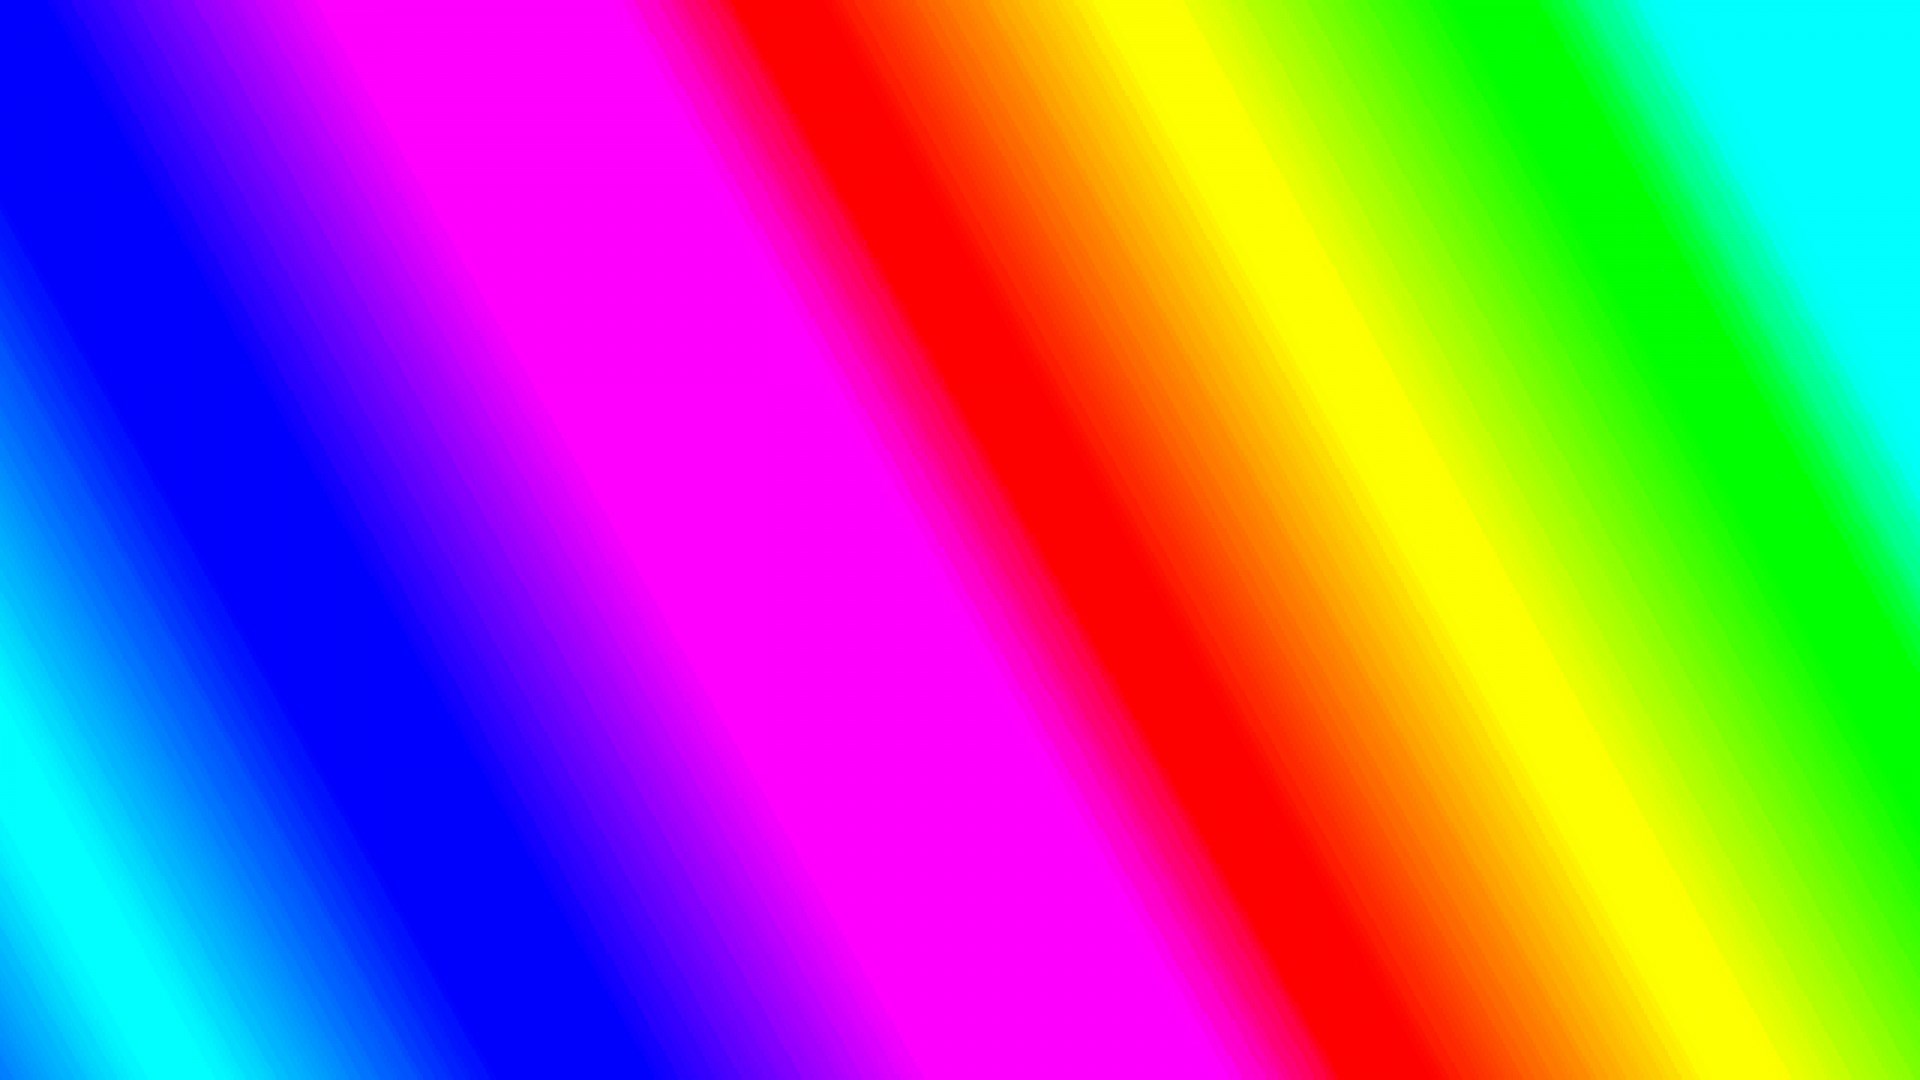 Rainbow Desktop Wallpaper Photos High Quality For Backgrounds ...